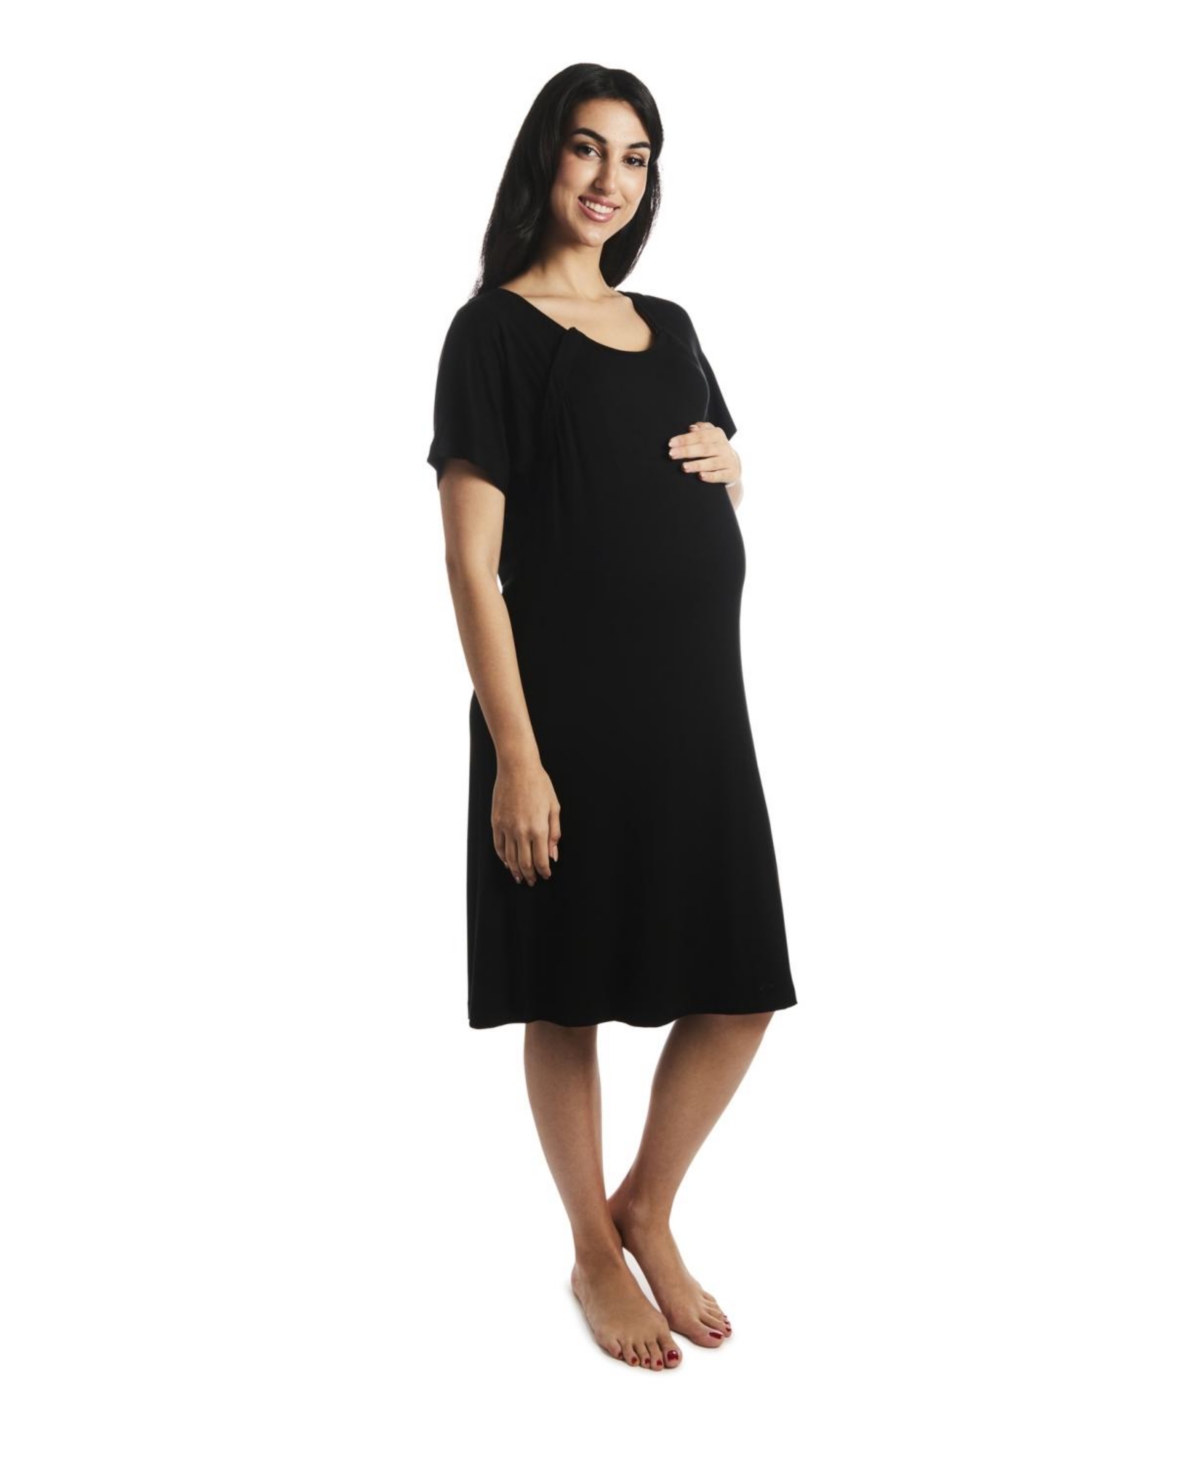 Women's Everly Grey Rosa Maternity/Nursing Hospital Gown - Black